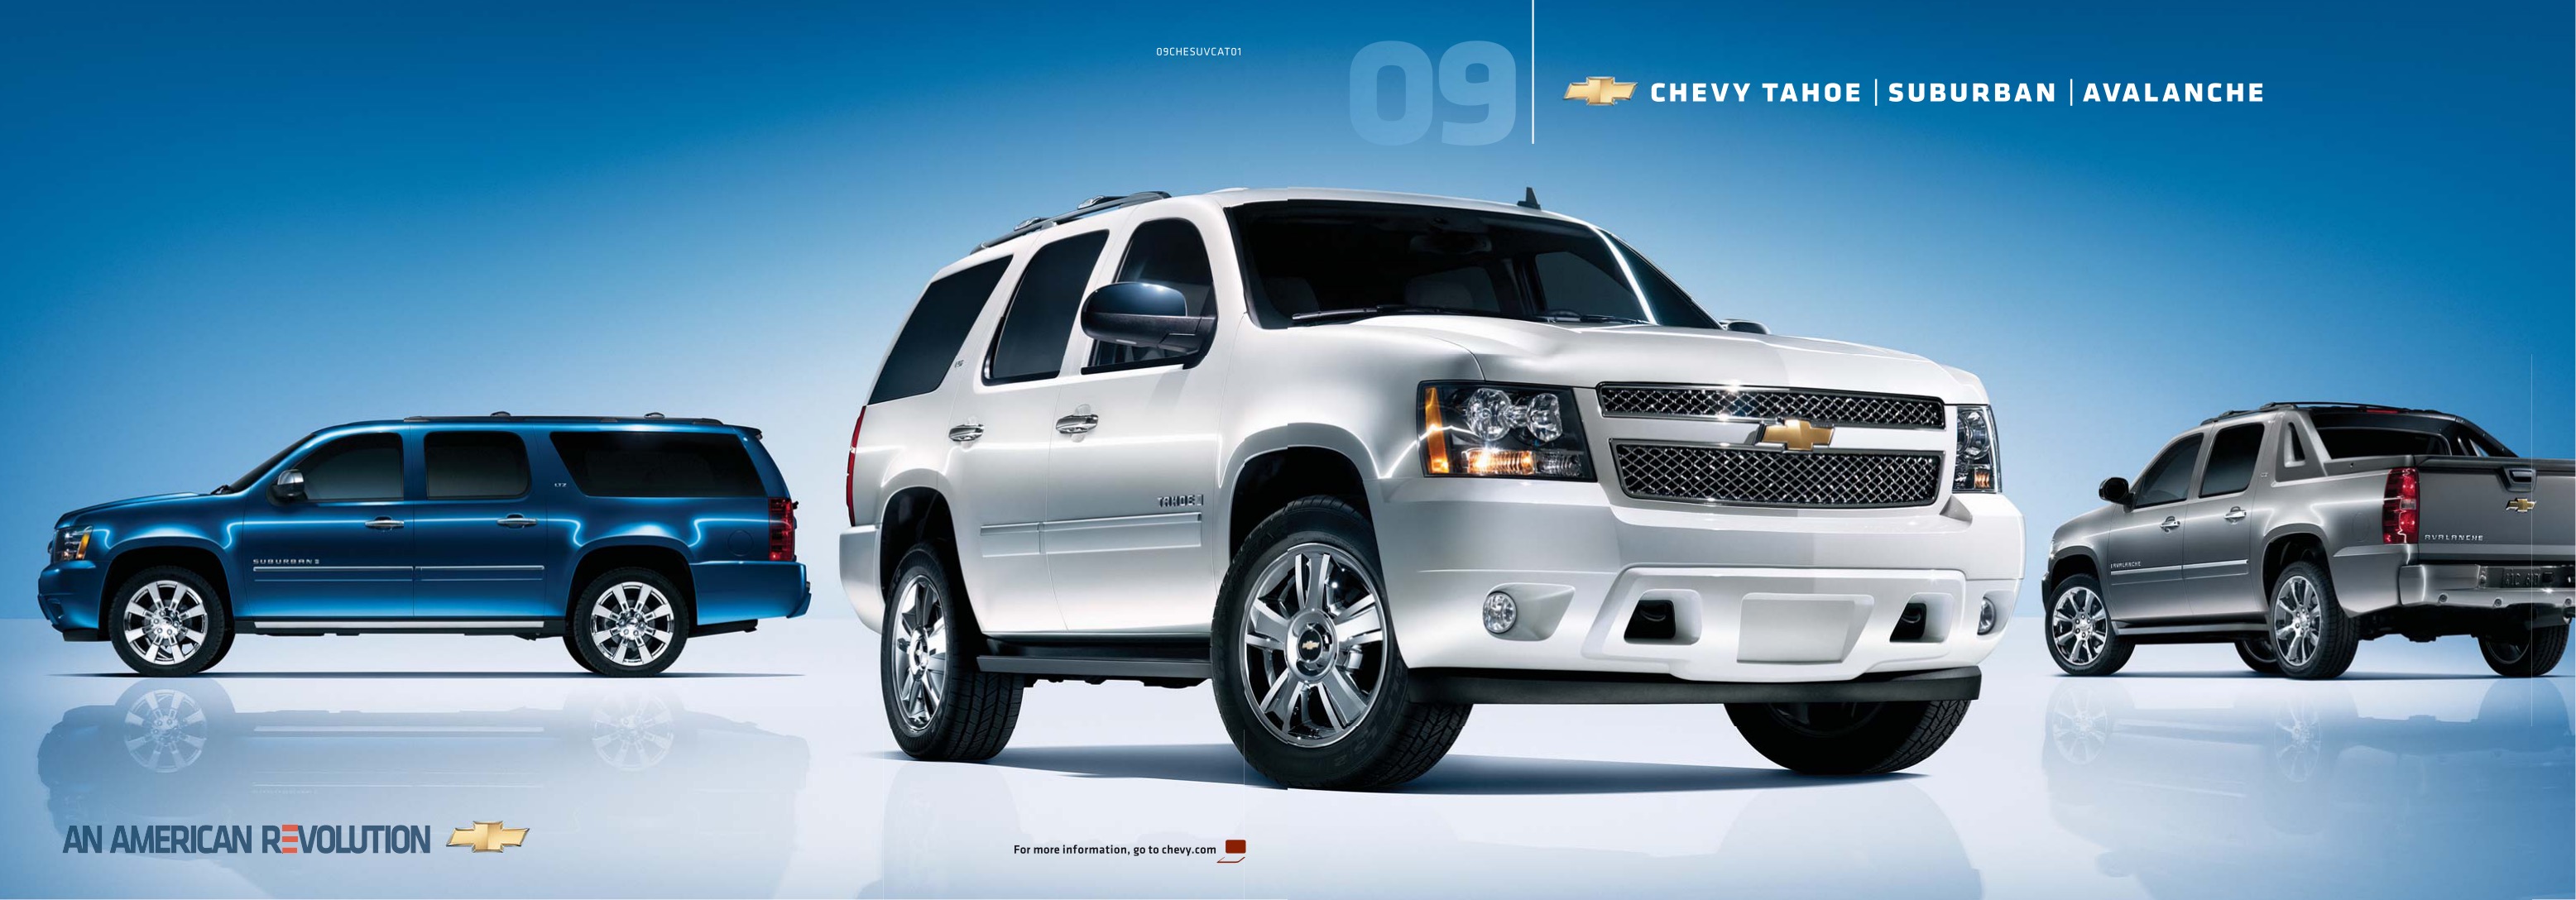 2009 Chevrolet Tahoe Brochure